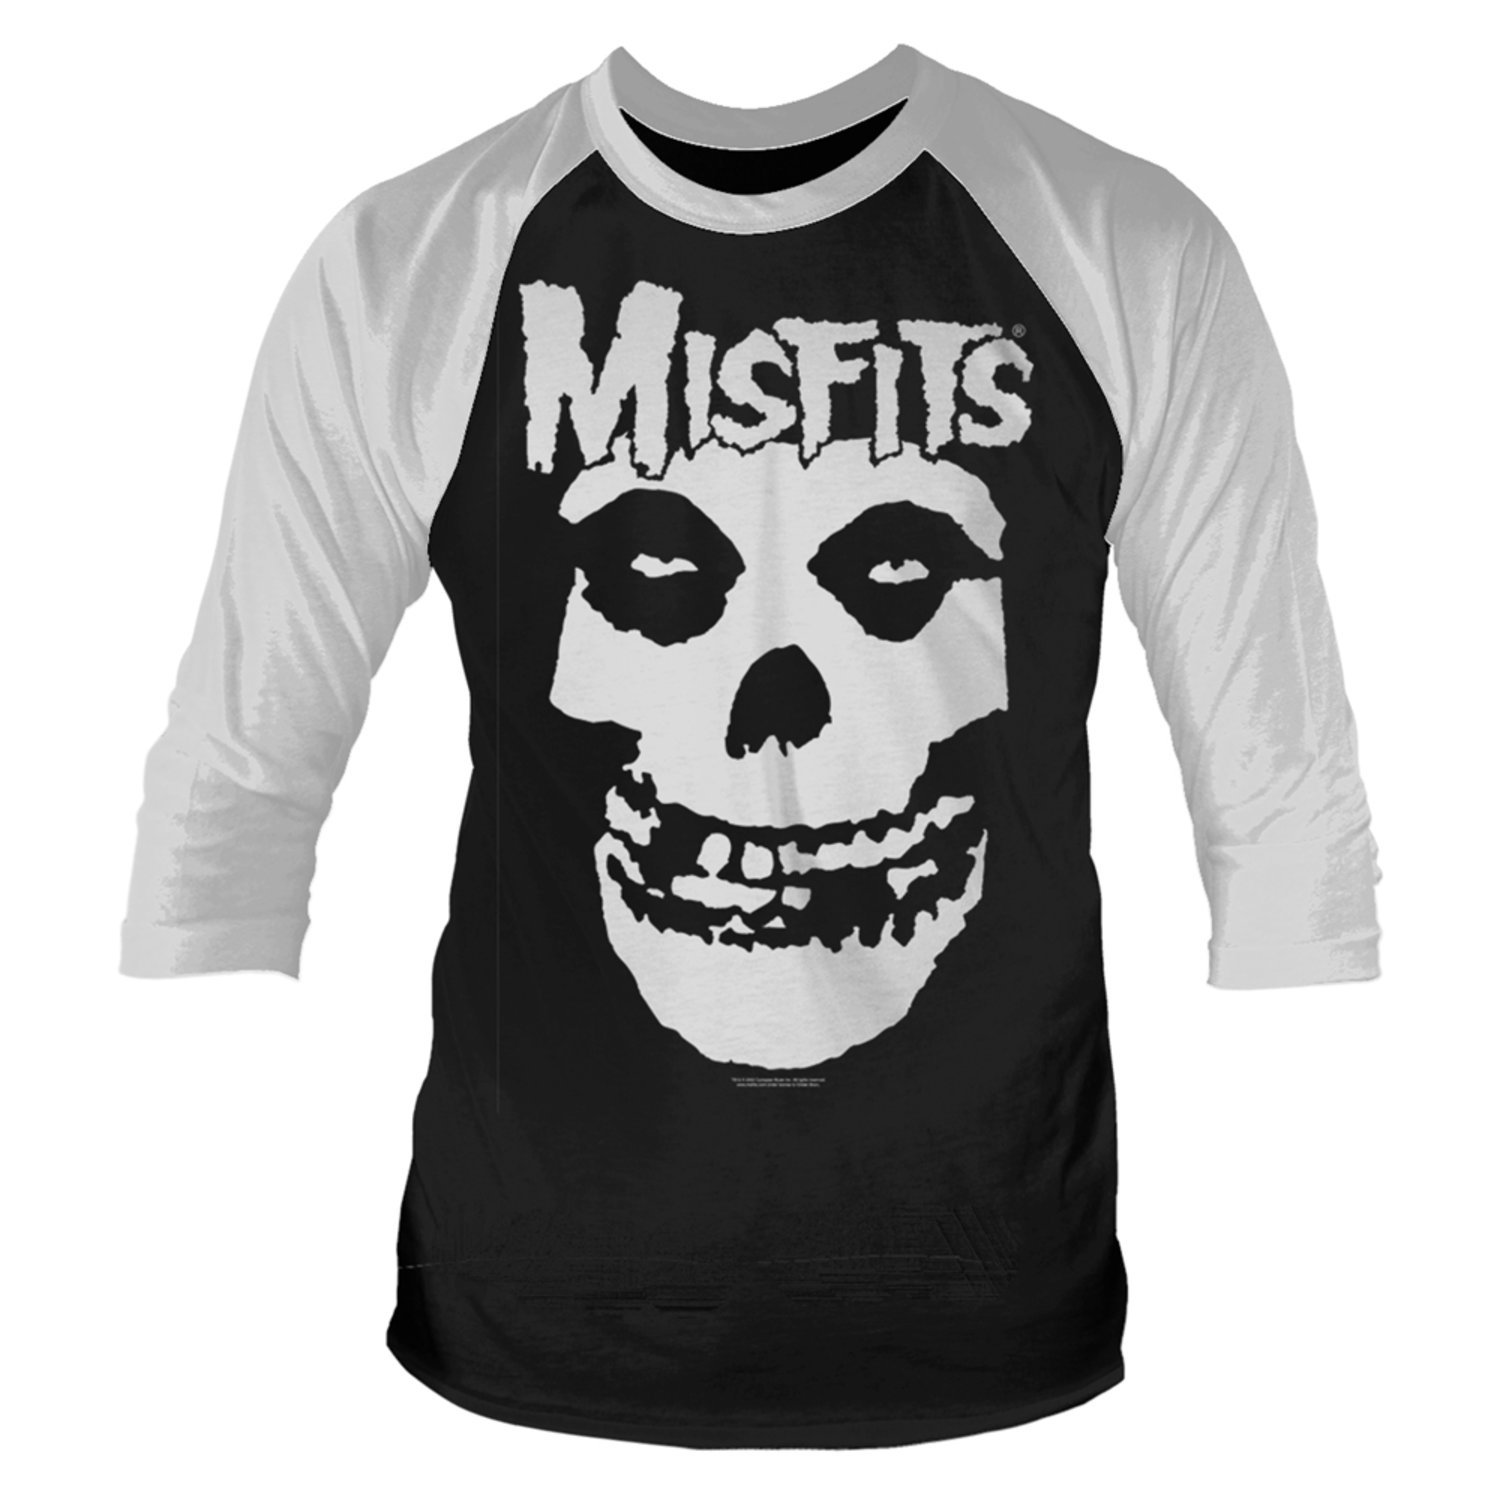 Buy Misfits Skull T-Shirt Longsleeve